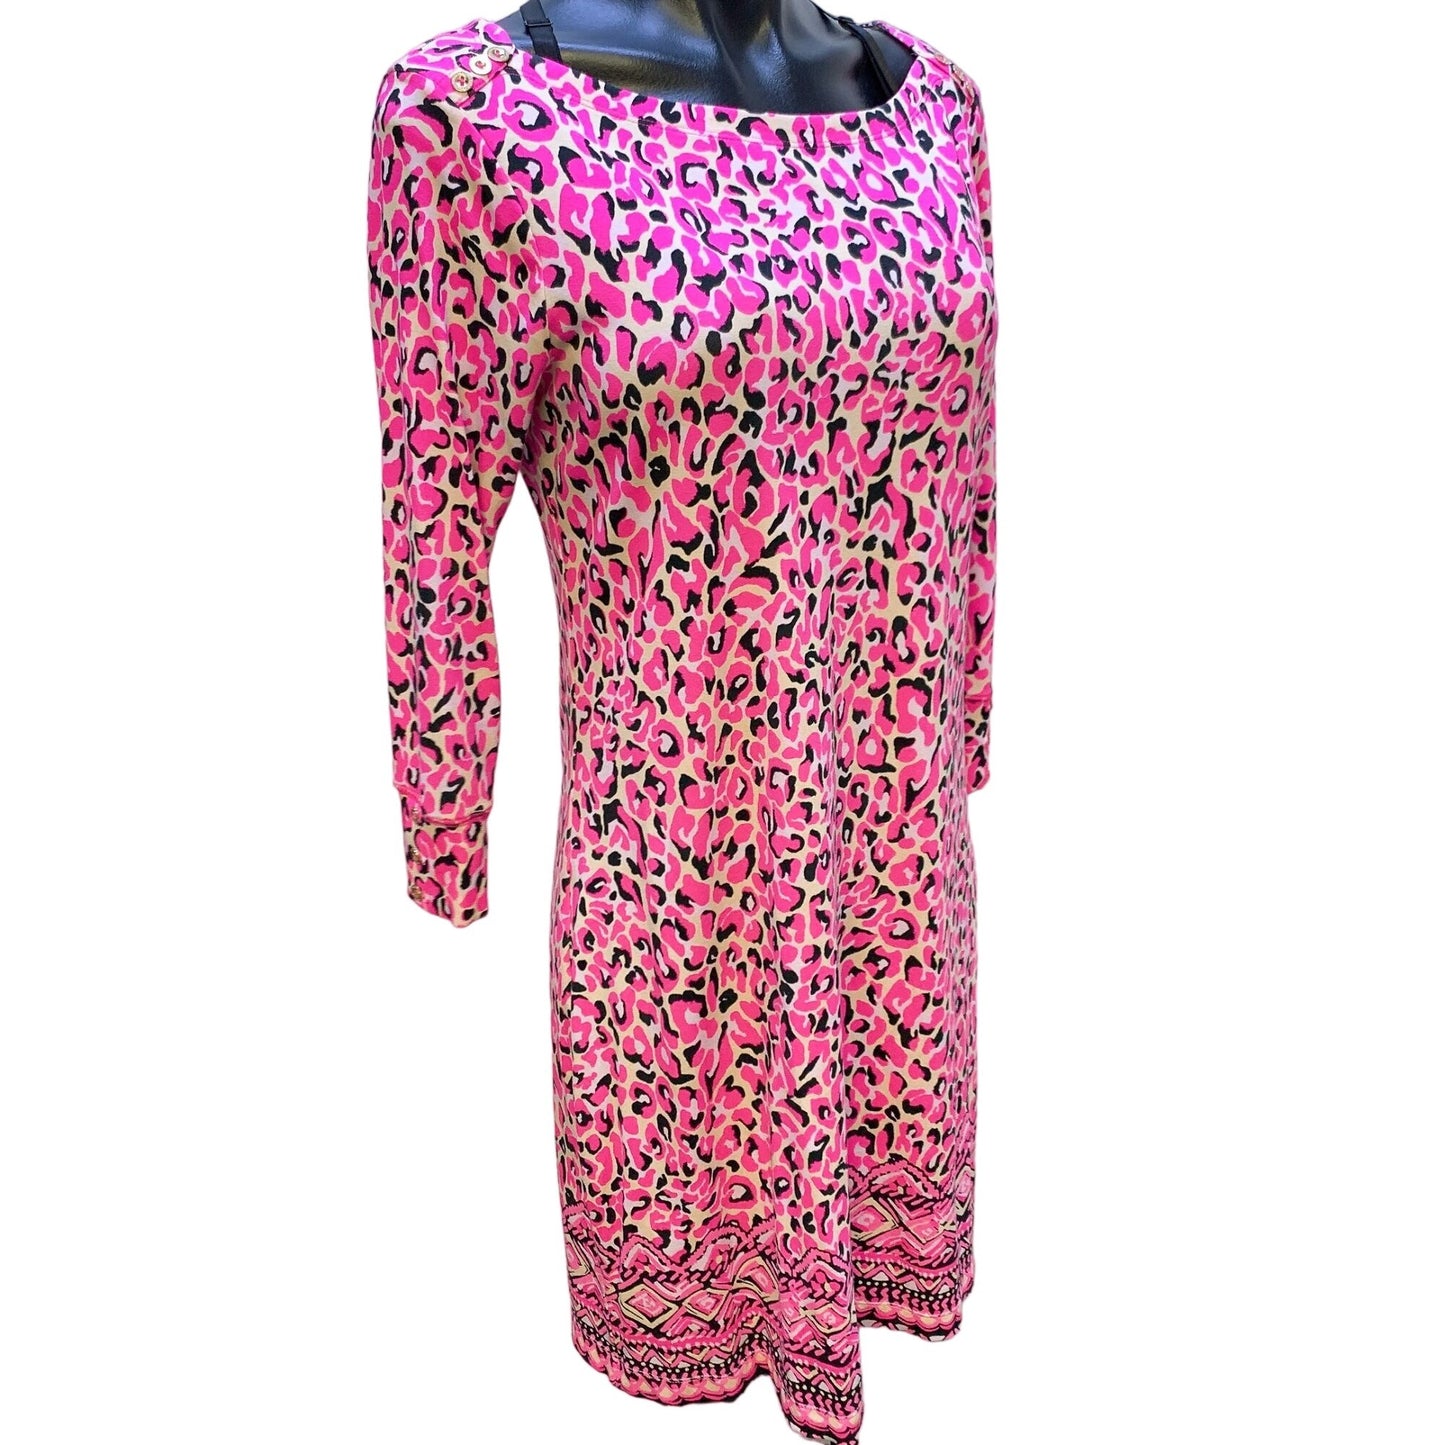 *Lily Pulitzer Pink & Black Animal Print Dress Medium